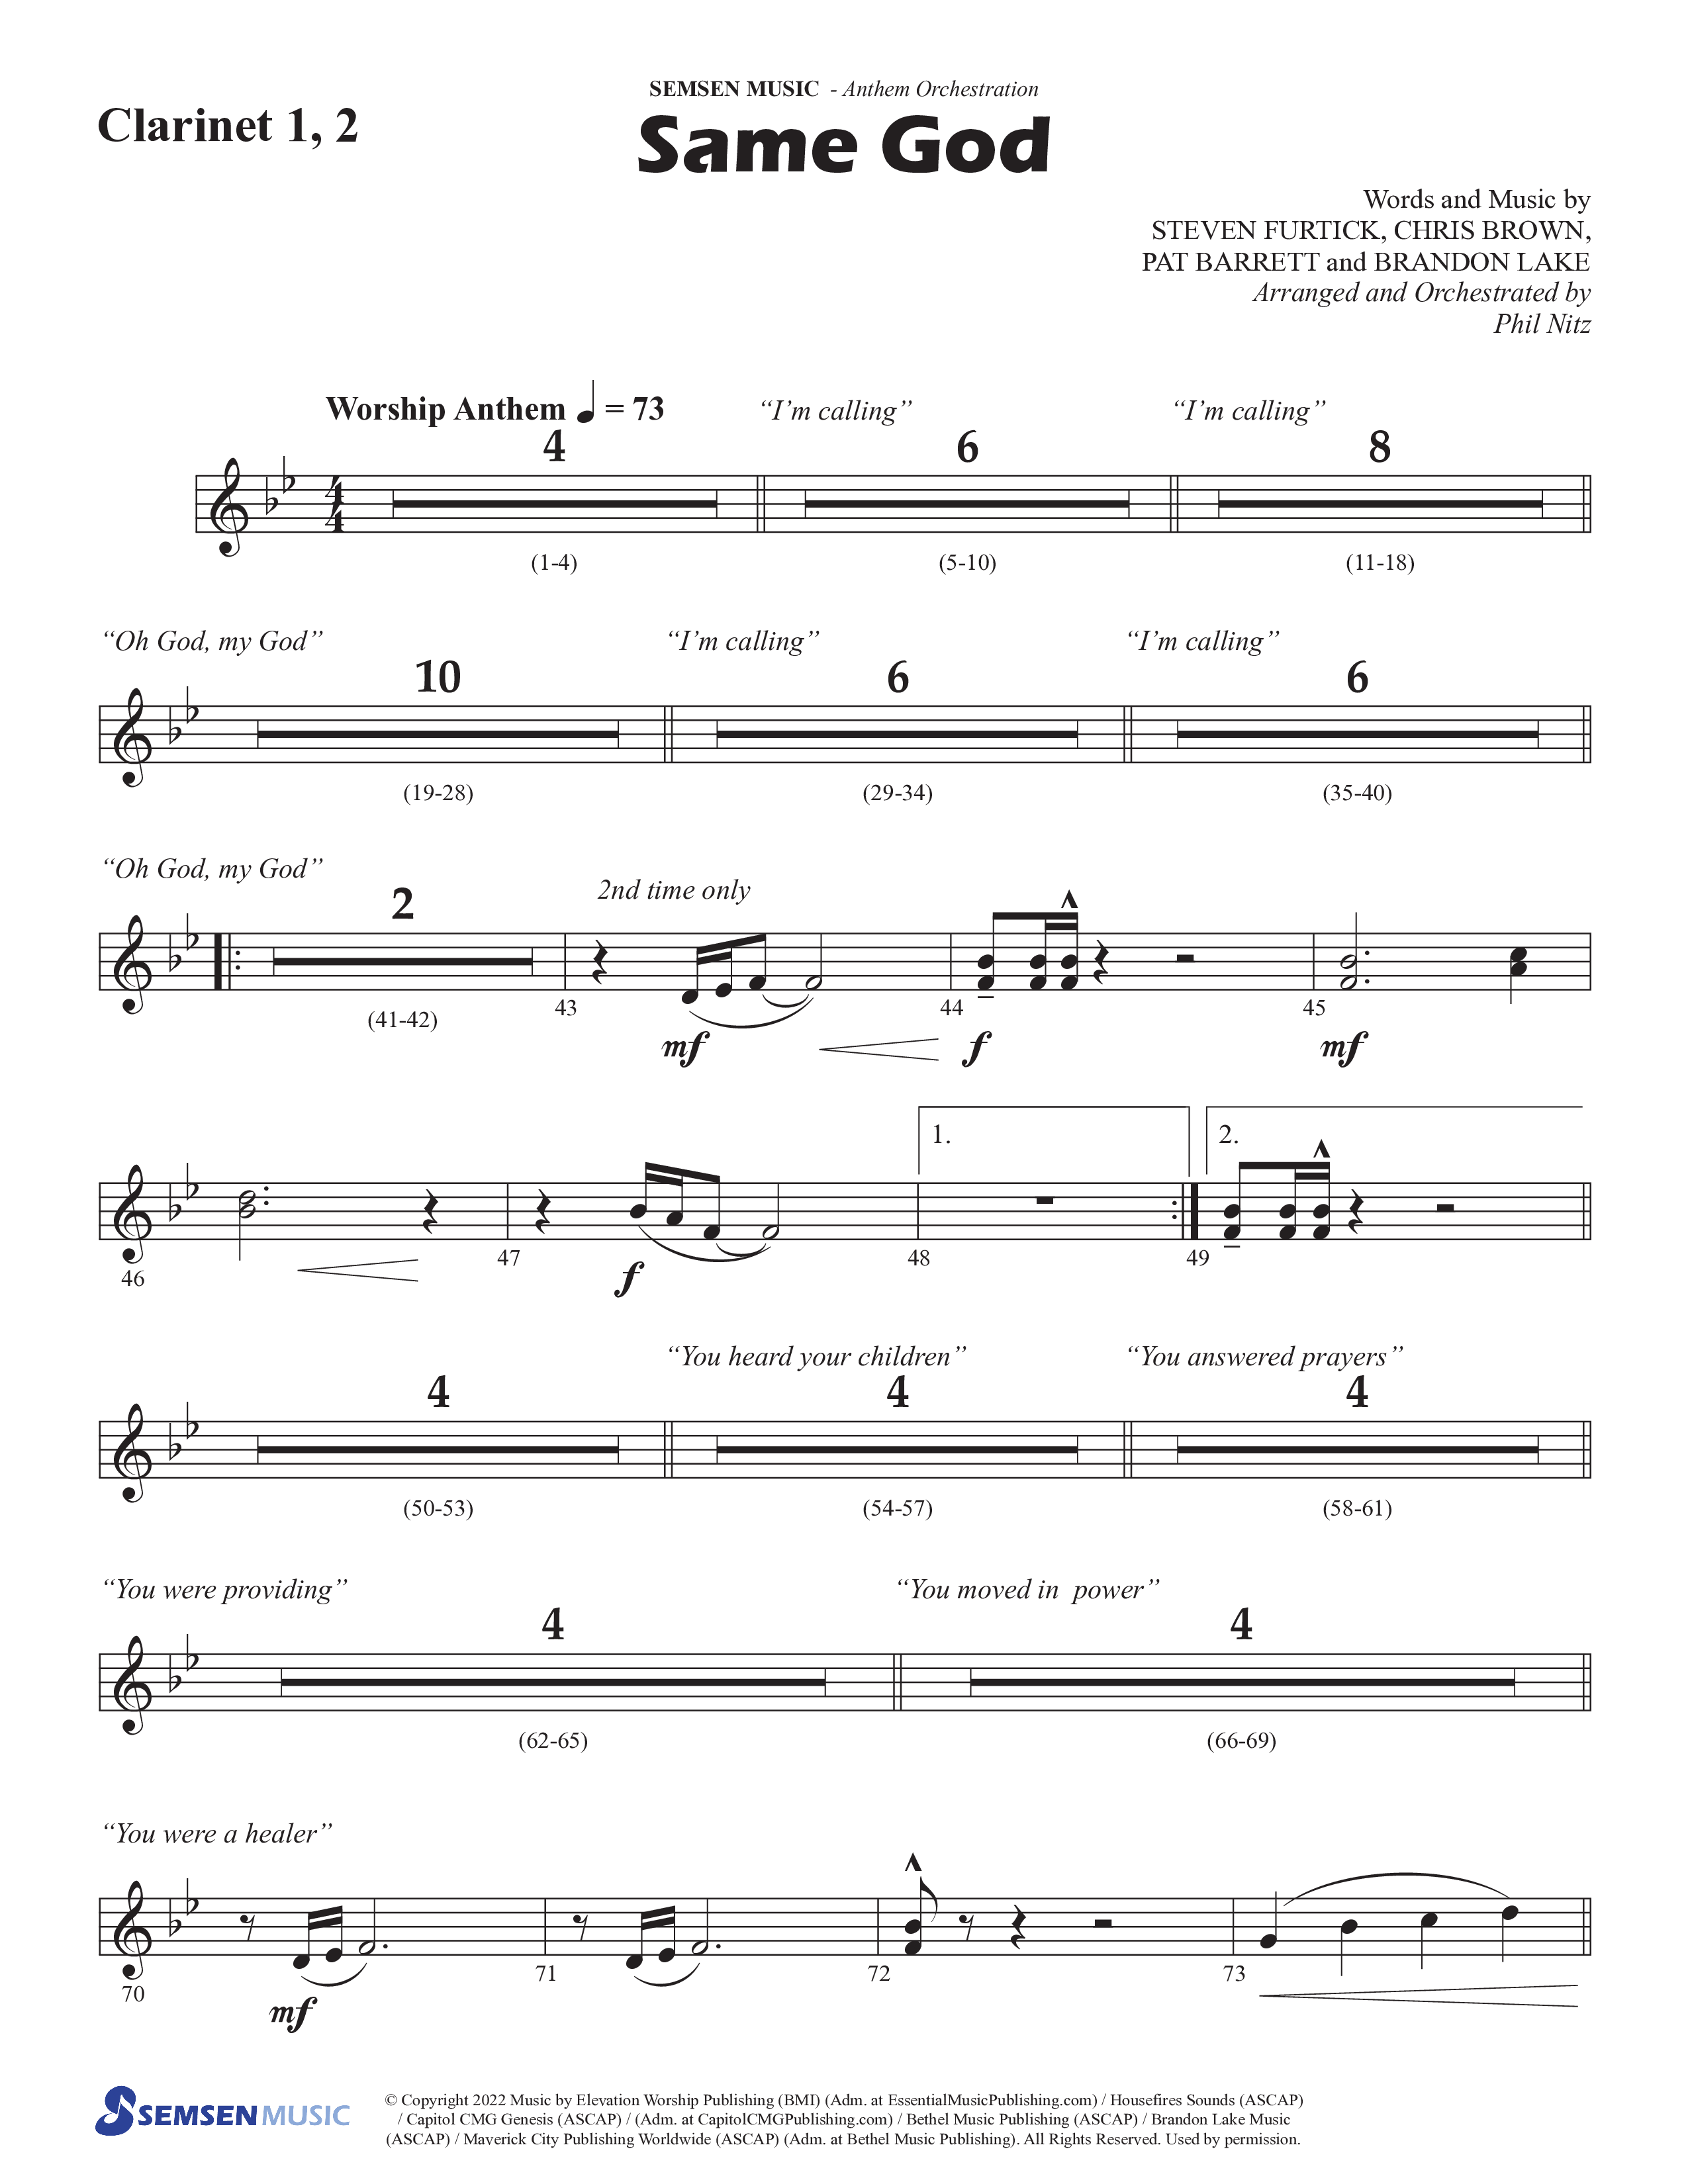 Same God (Choral Anthem SATB) Clarinet 1/2 (Semsen Music / Arr. Phil Nitz)